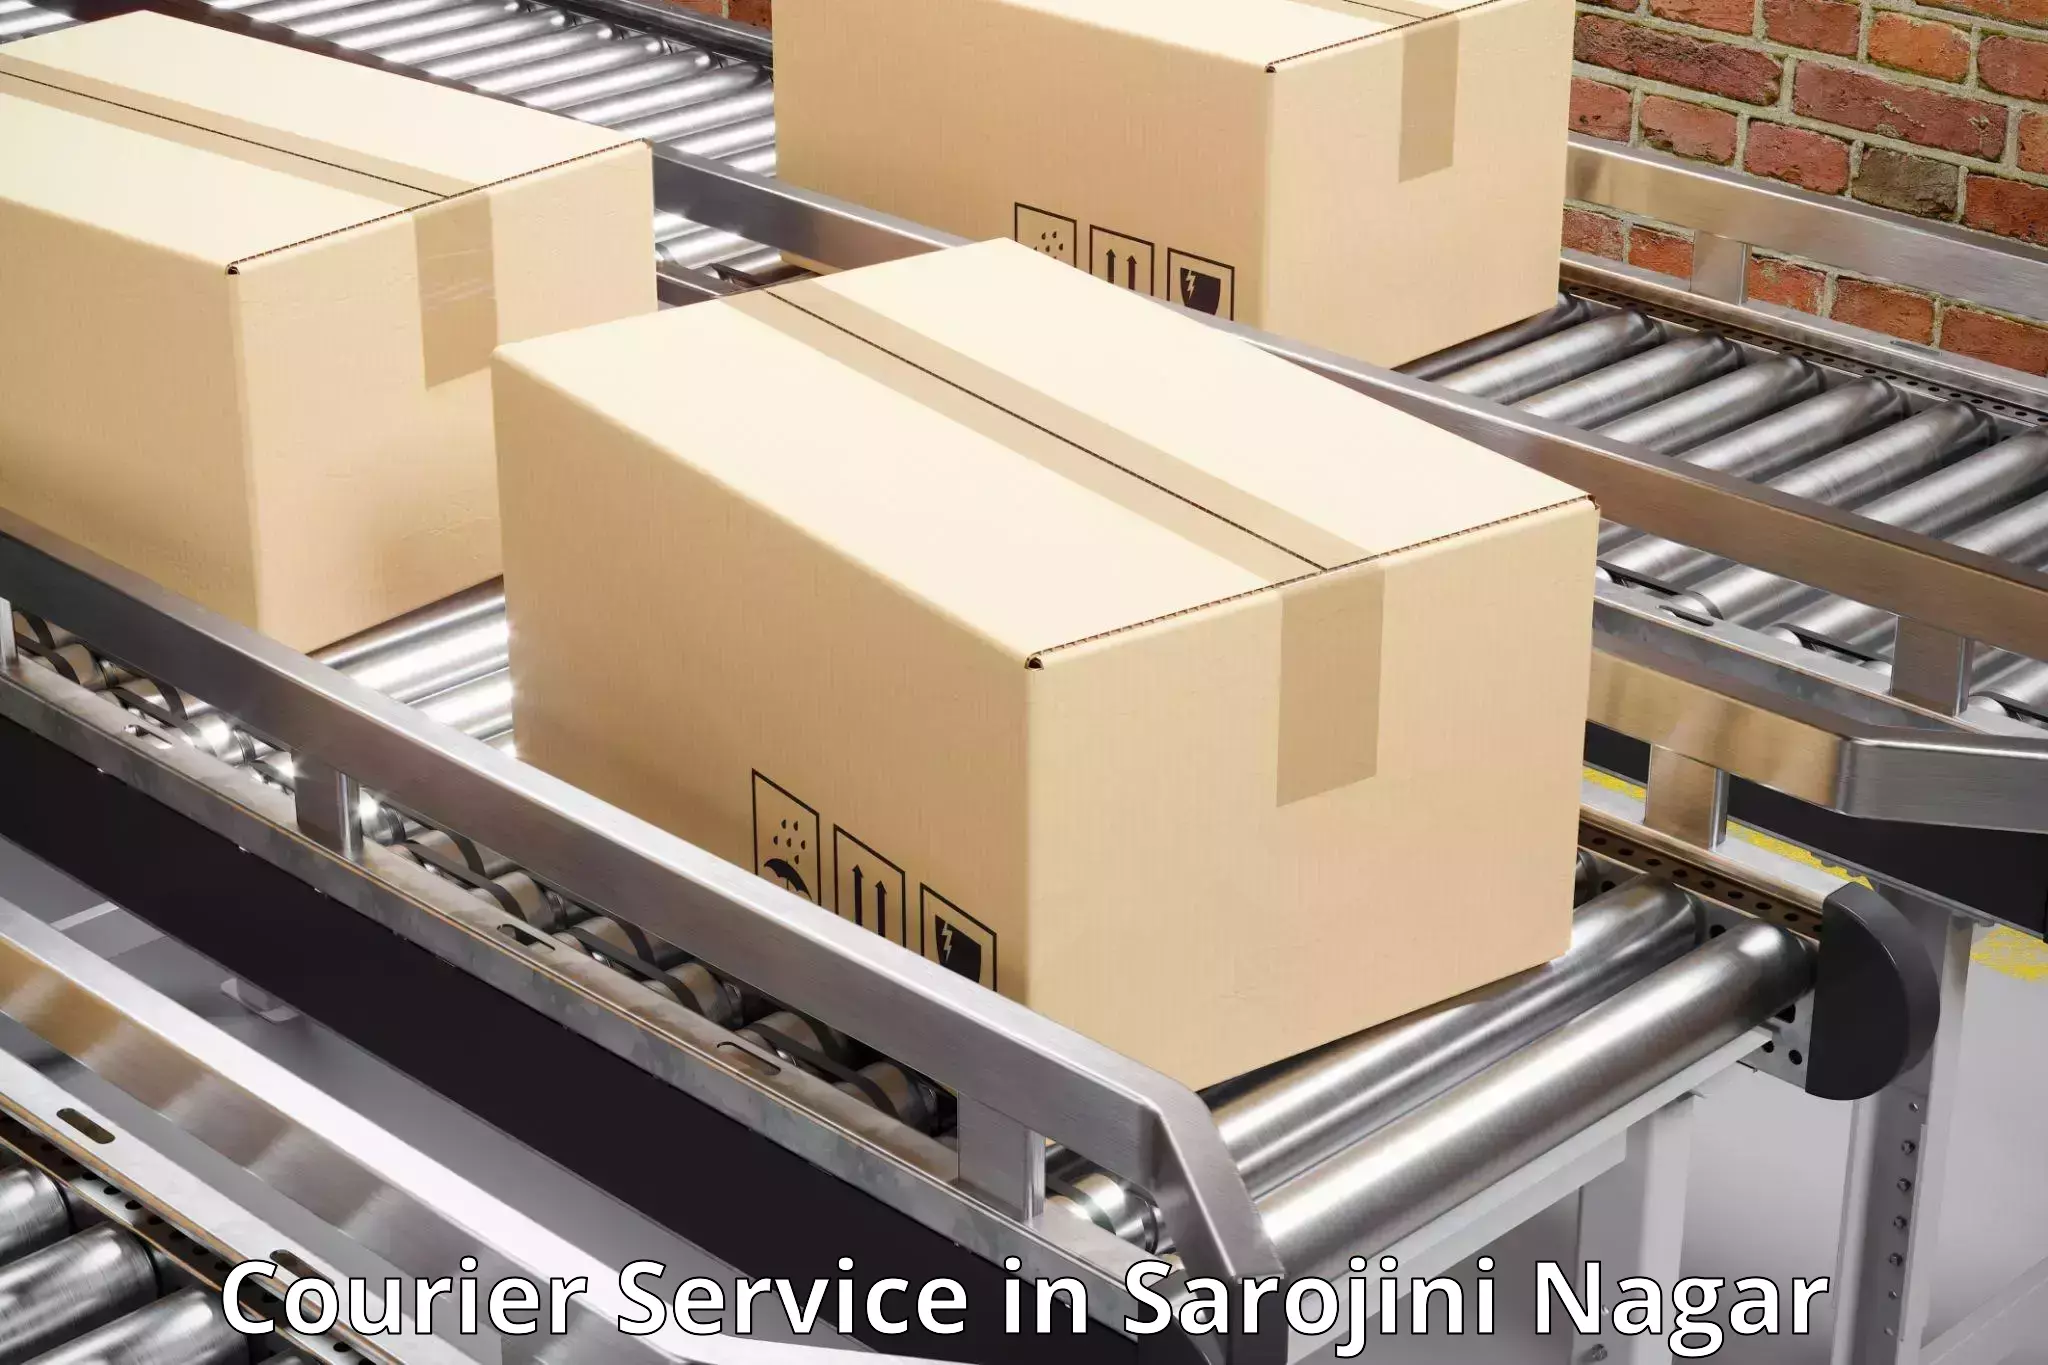 Courier service comparison in Sarojini Nagar